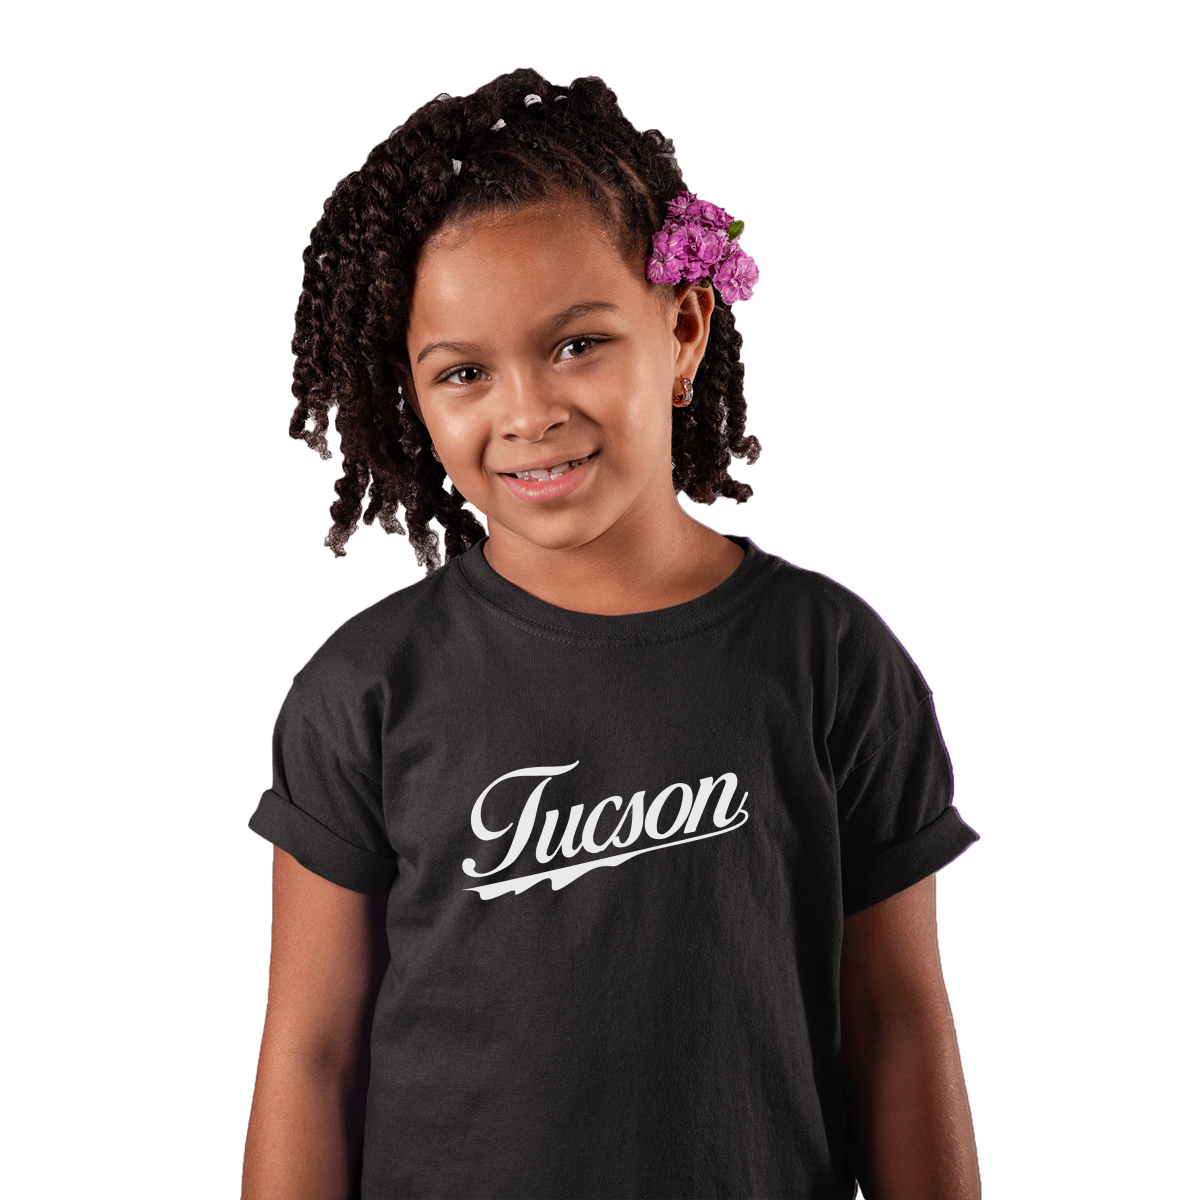 Tucson Kids T-shirt | Black